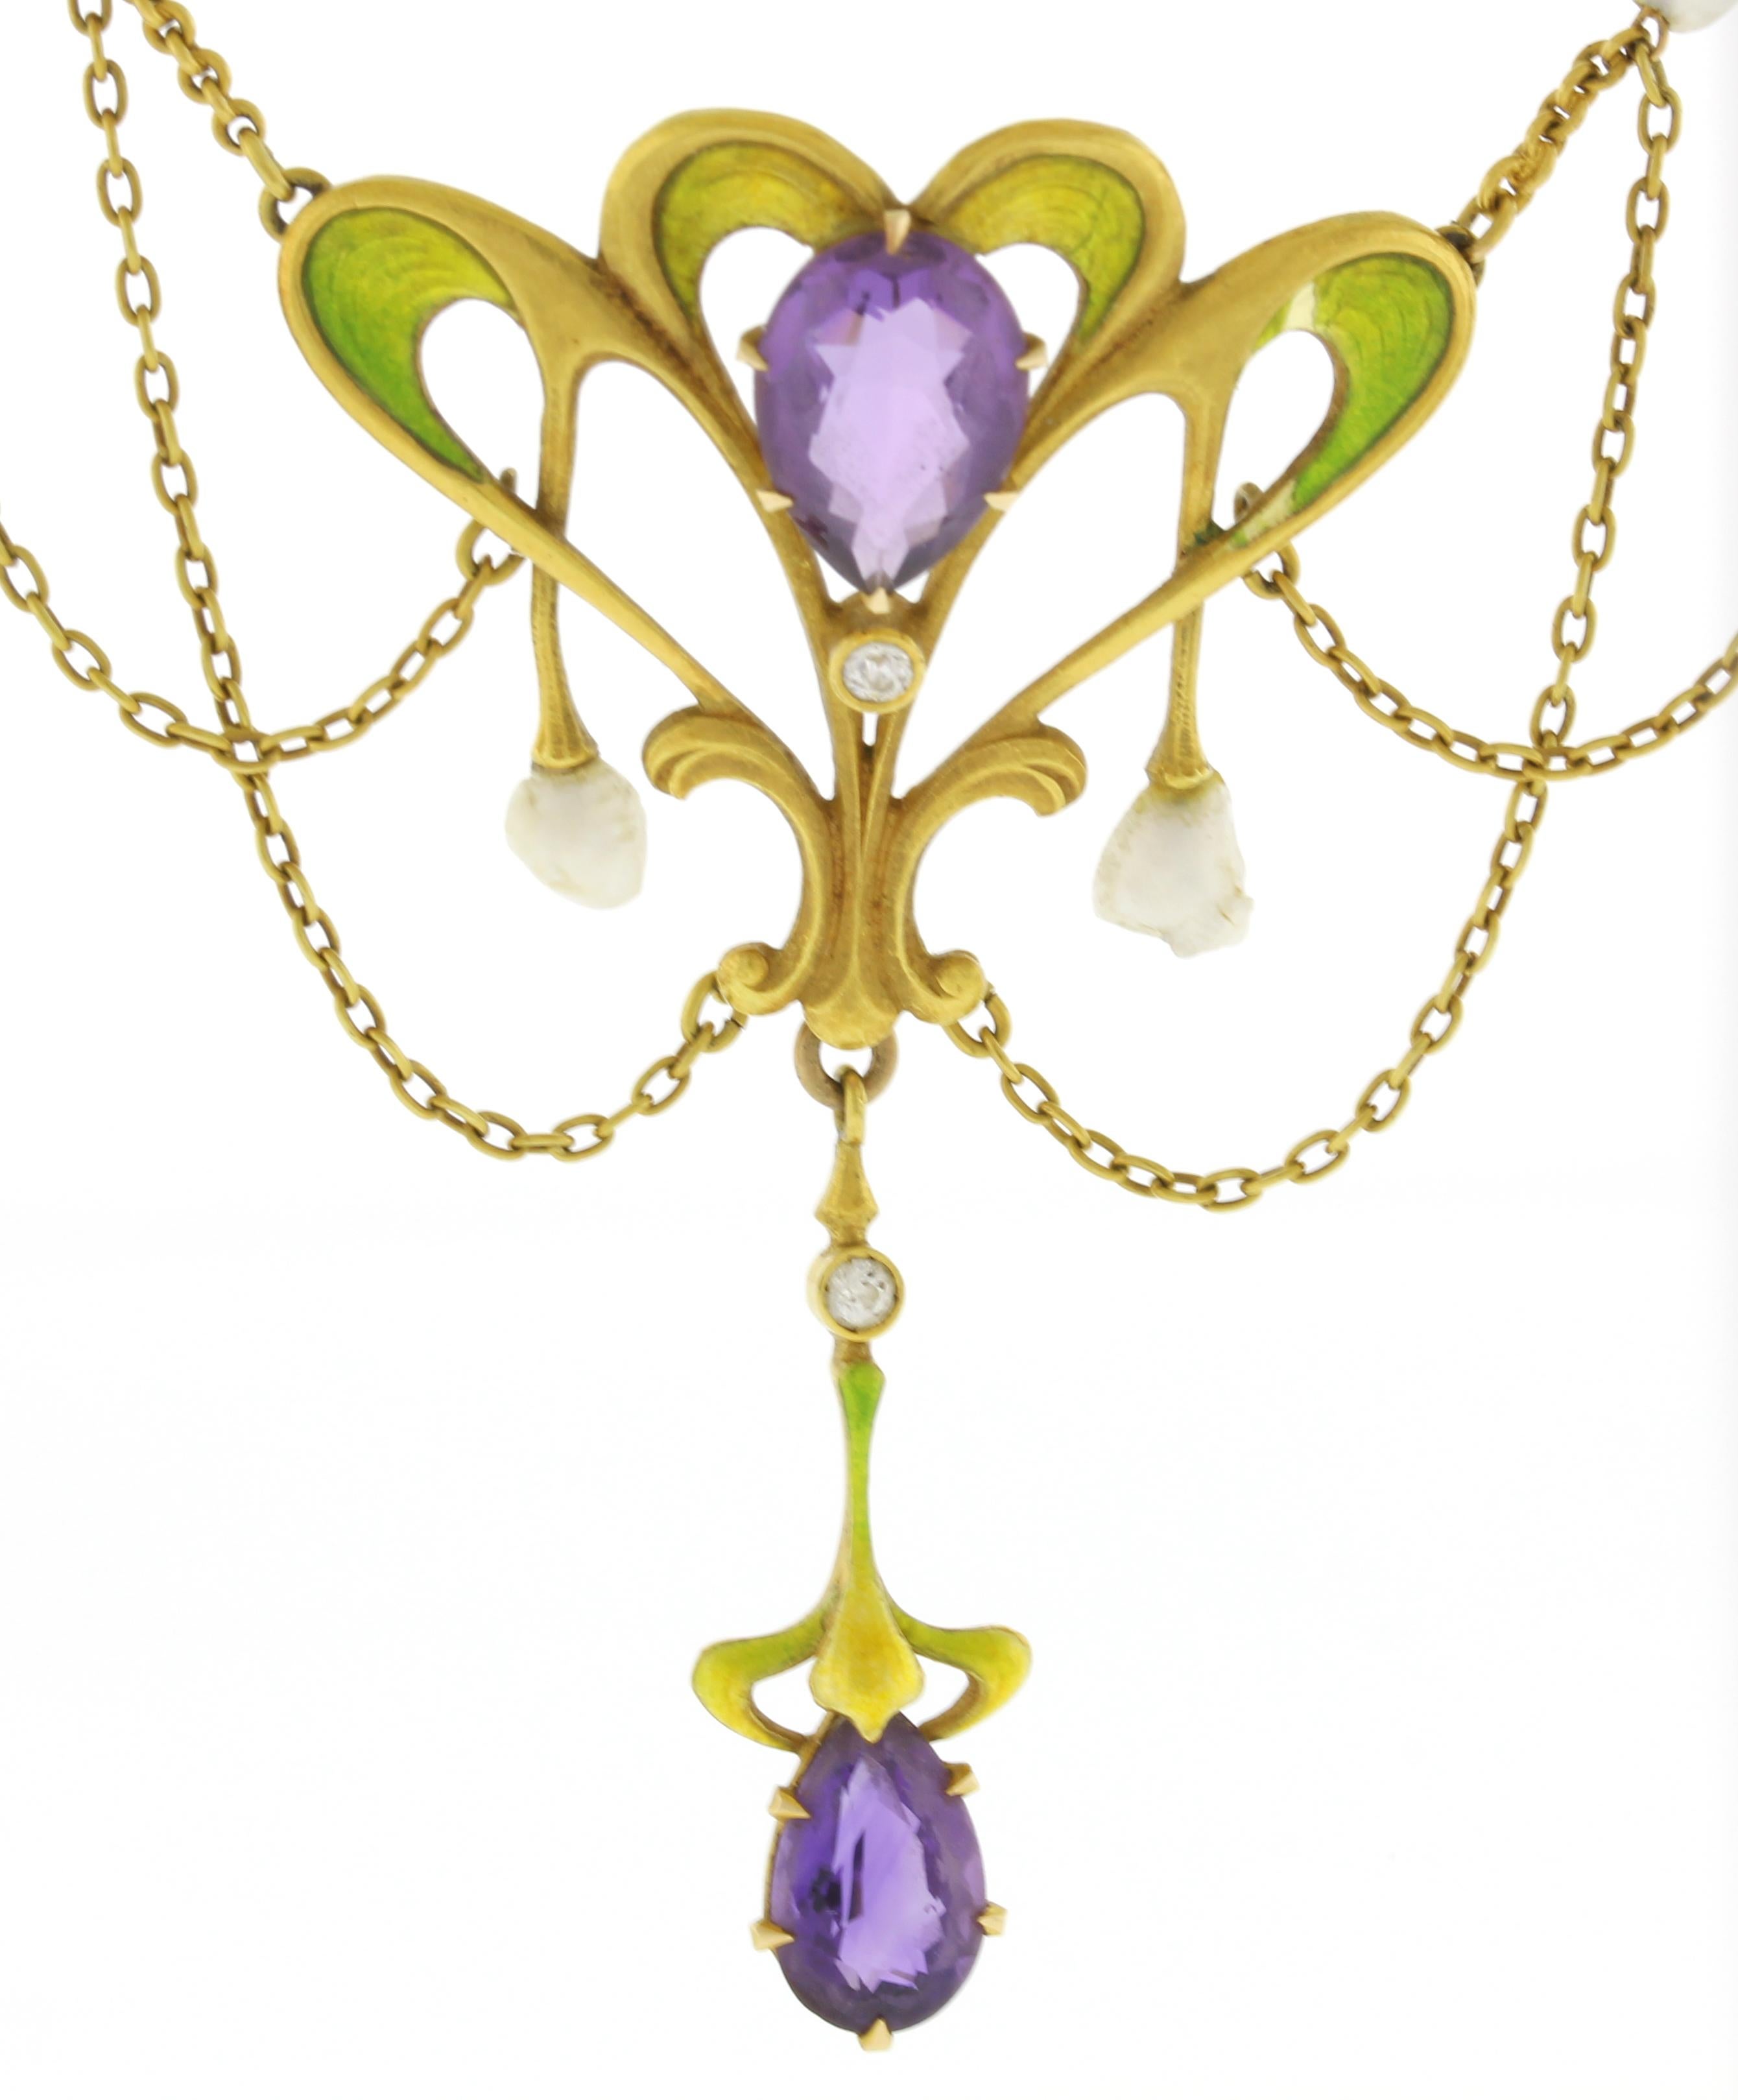 Brilliant Cut Art Nouveau Amethyst, Pearl and Diamond Festoon Necklace